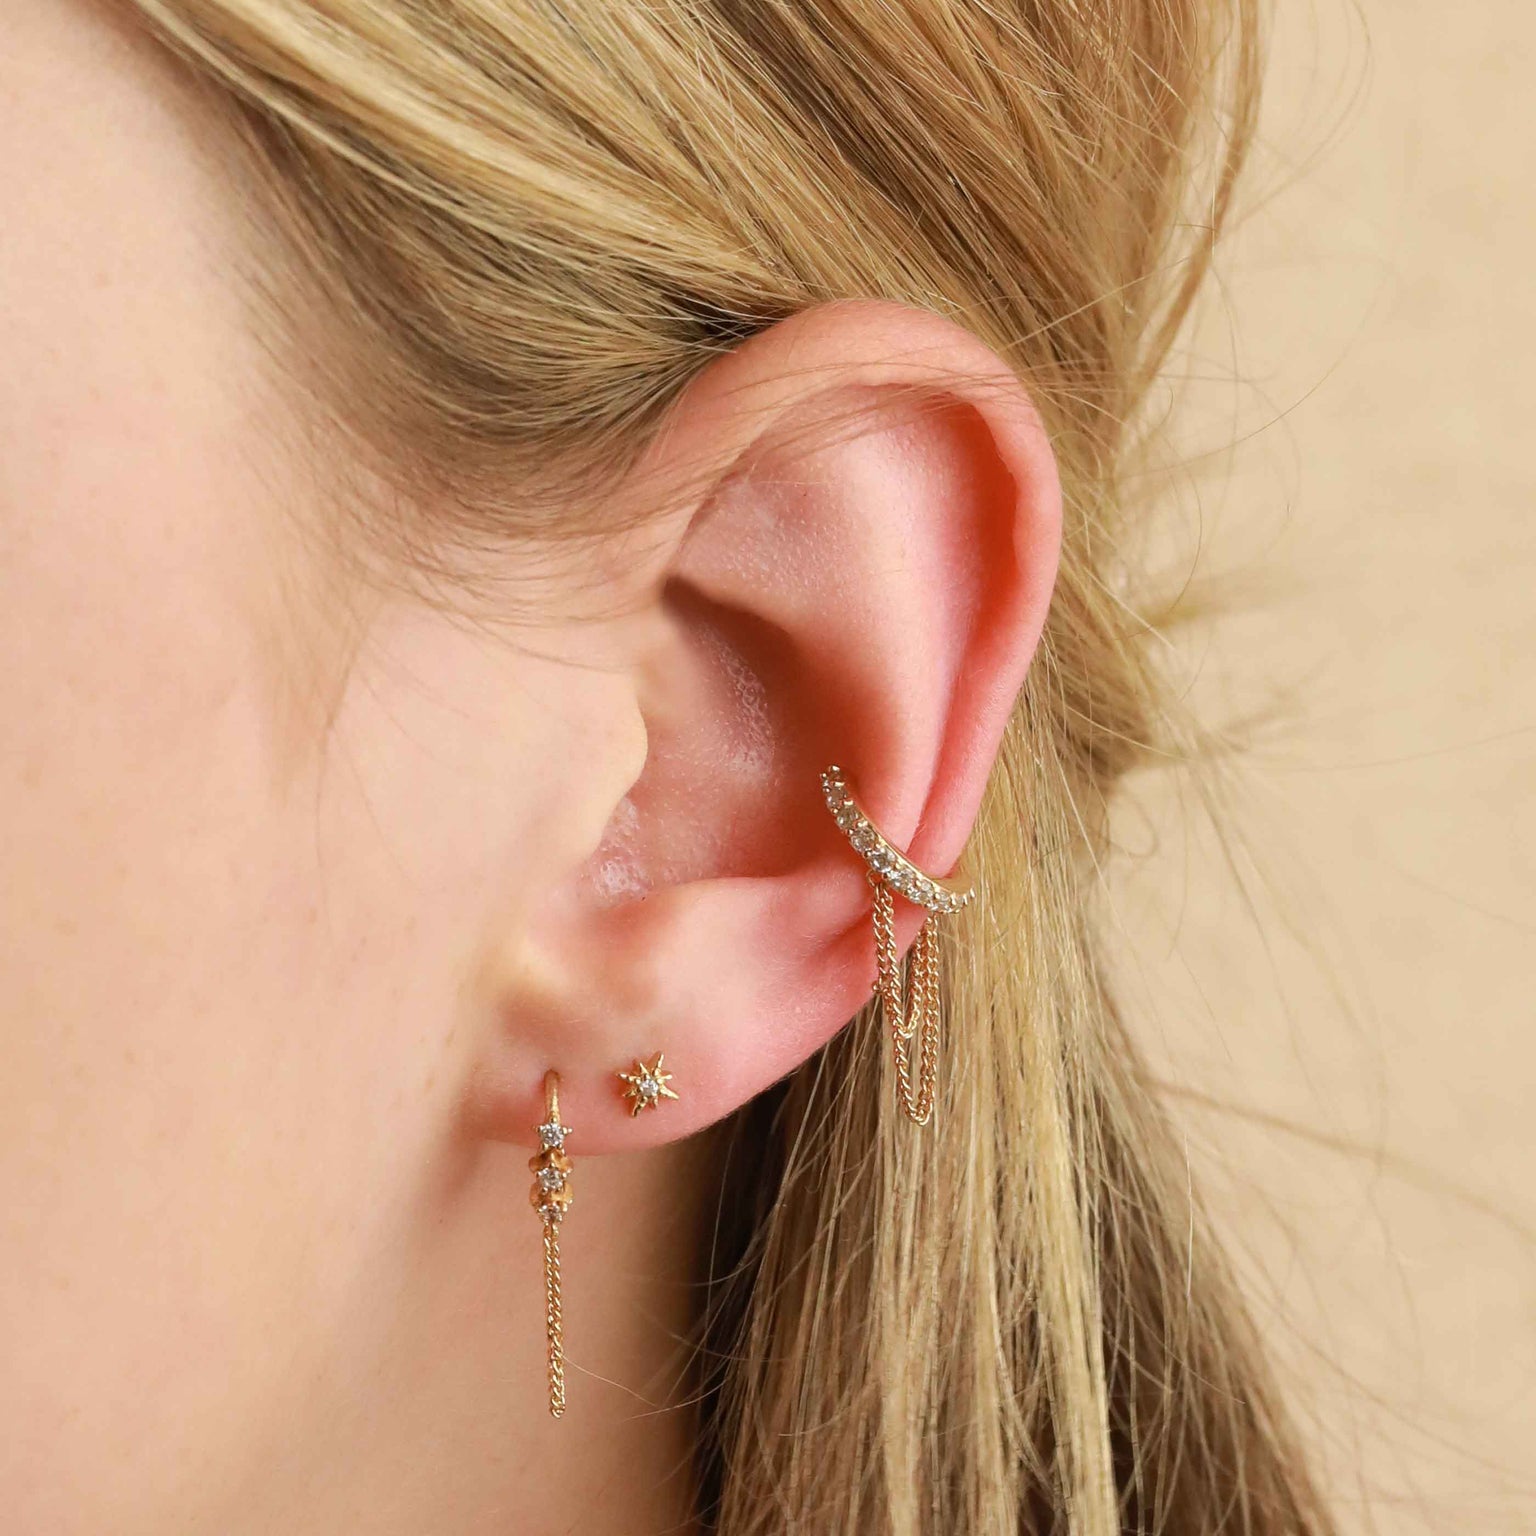 Ear Cuff with Crystal Chain in Gold | Jewellery by Astrid & Miyu